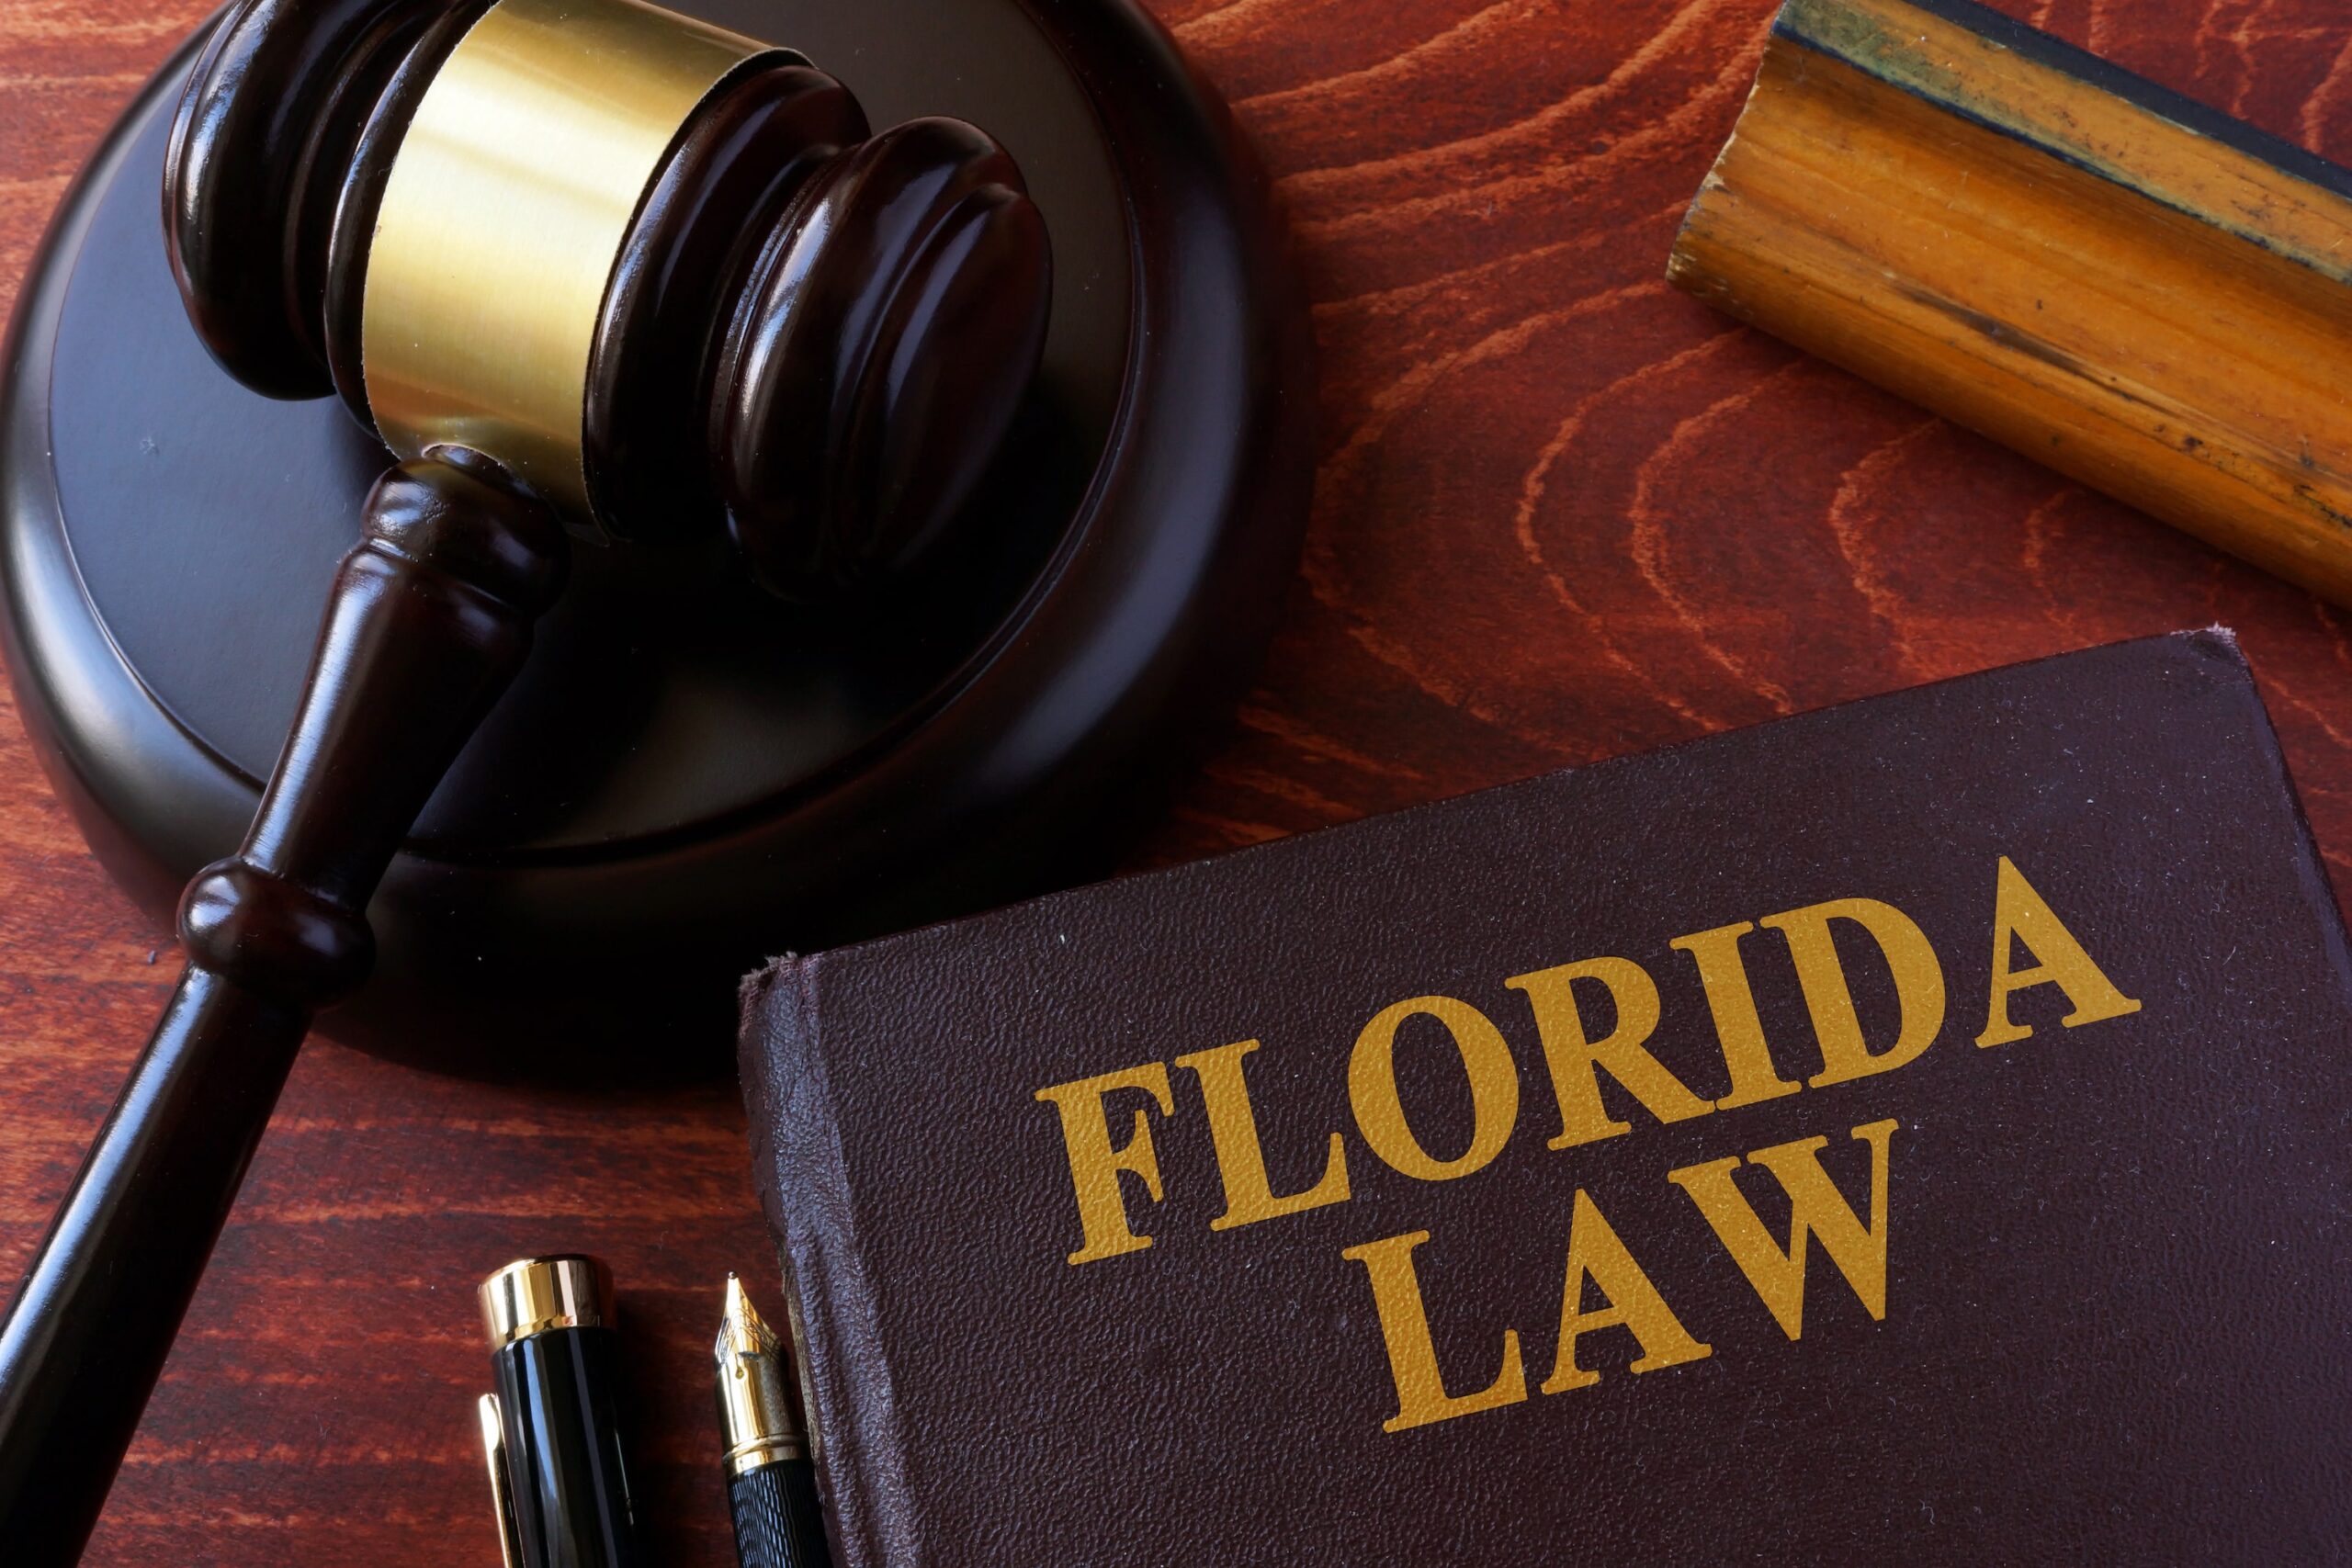 Florida Law book next to judge gavel